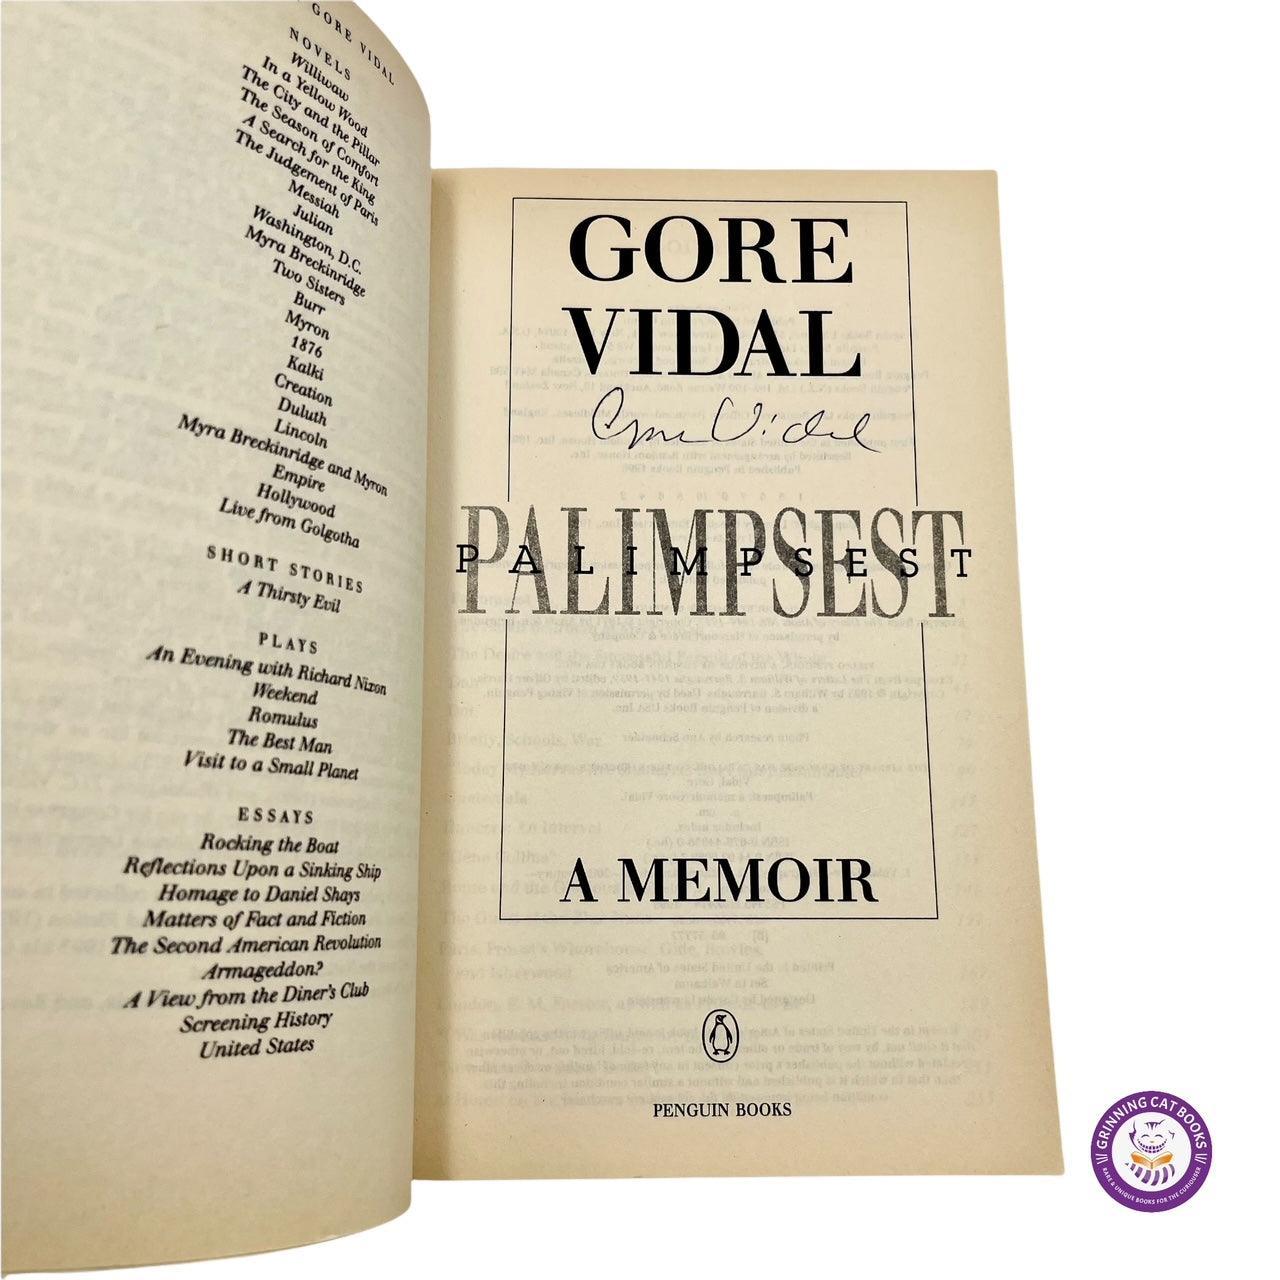 Palimpsest: A Memoir (signed by Gore Vidal) - Grinning Cat Books - AMERICAN LITERATURE - AUTOBIOGRAPHY, MEMOIR, SIGNED